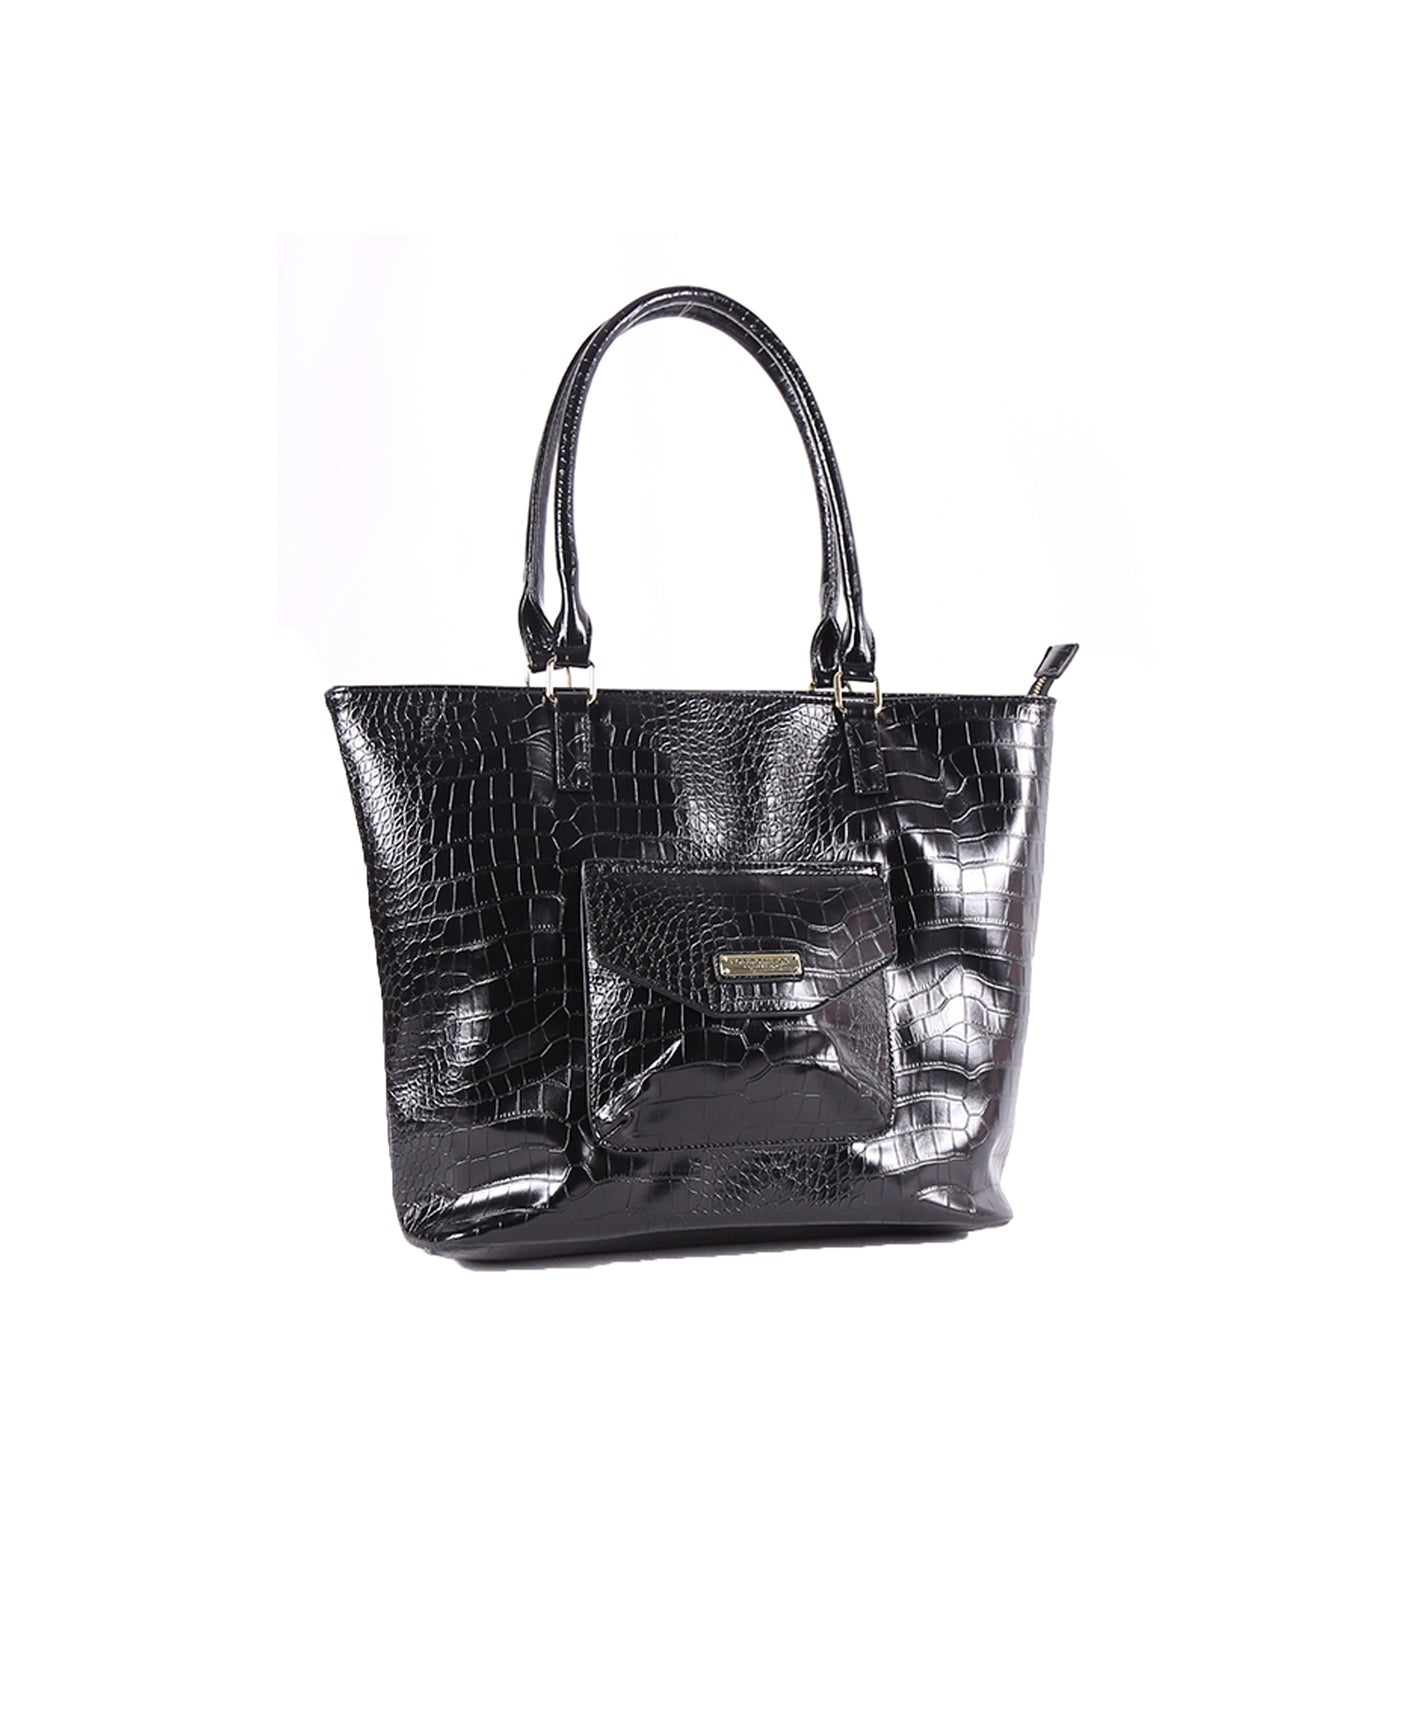 black vegan leather tote bag with handles